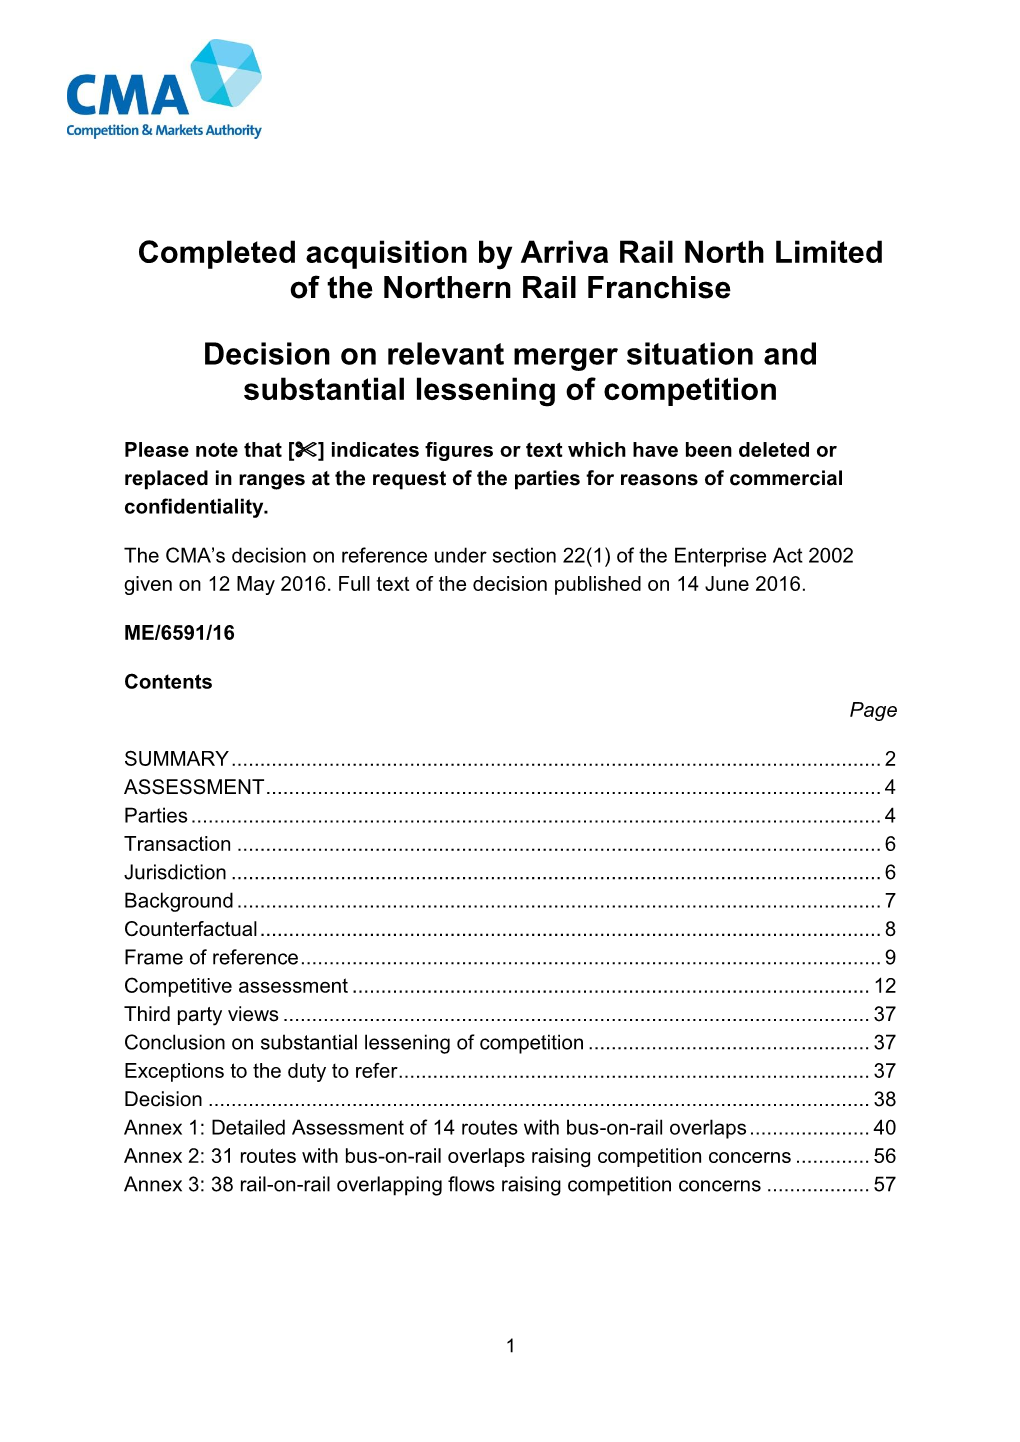 Arriva Rail / Northern Rail Decision